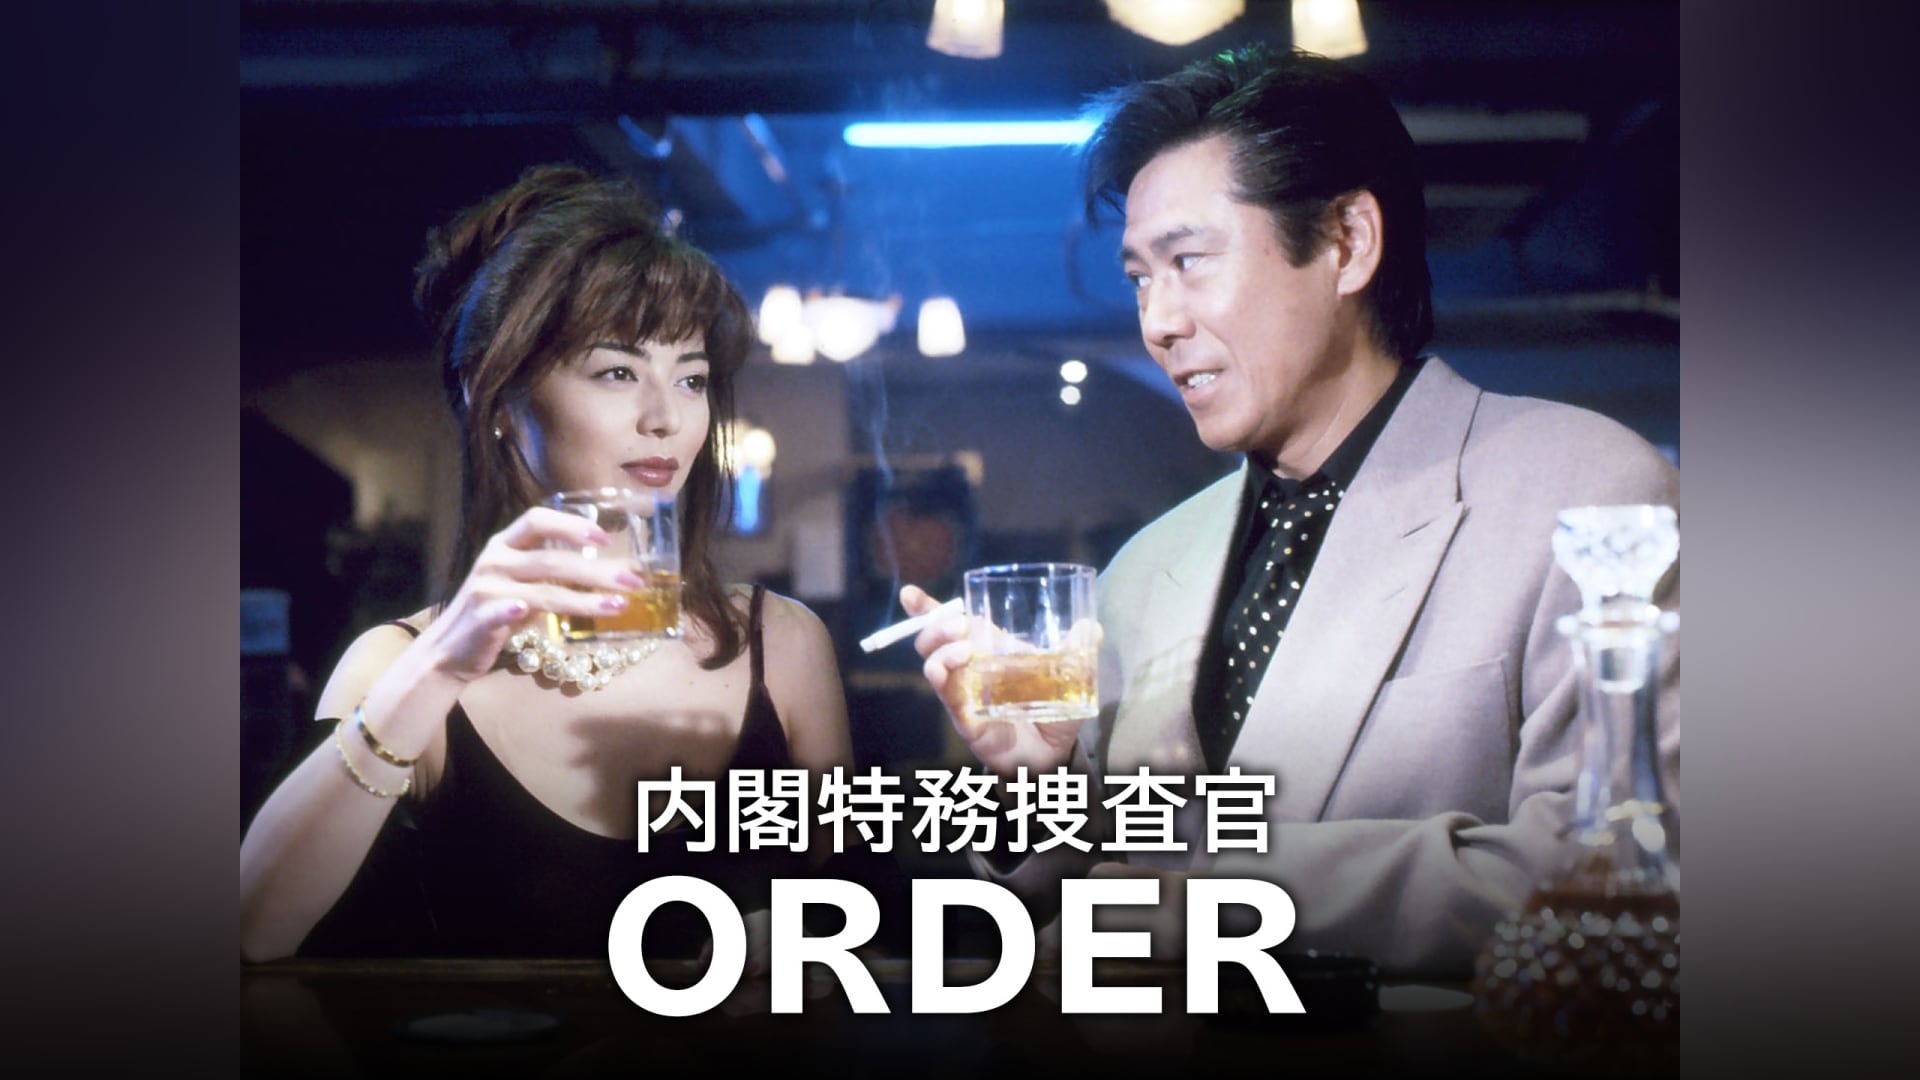 24c ★ay 内閣特務捜査官 ORDER [DVD]邦画・日本映画